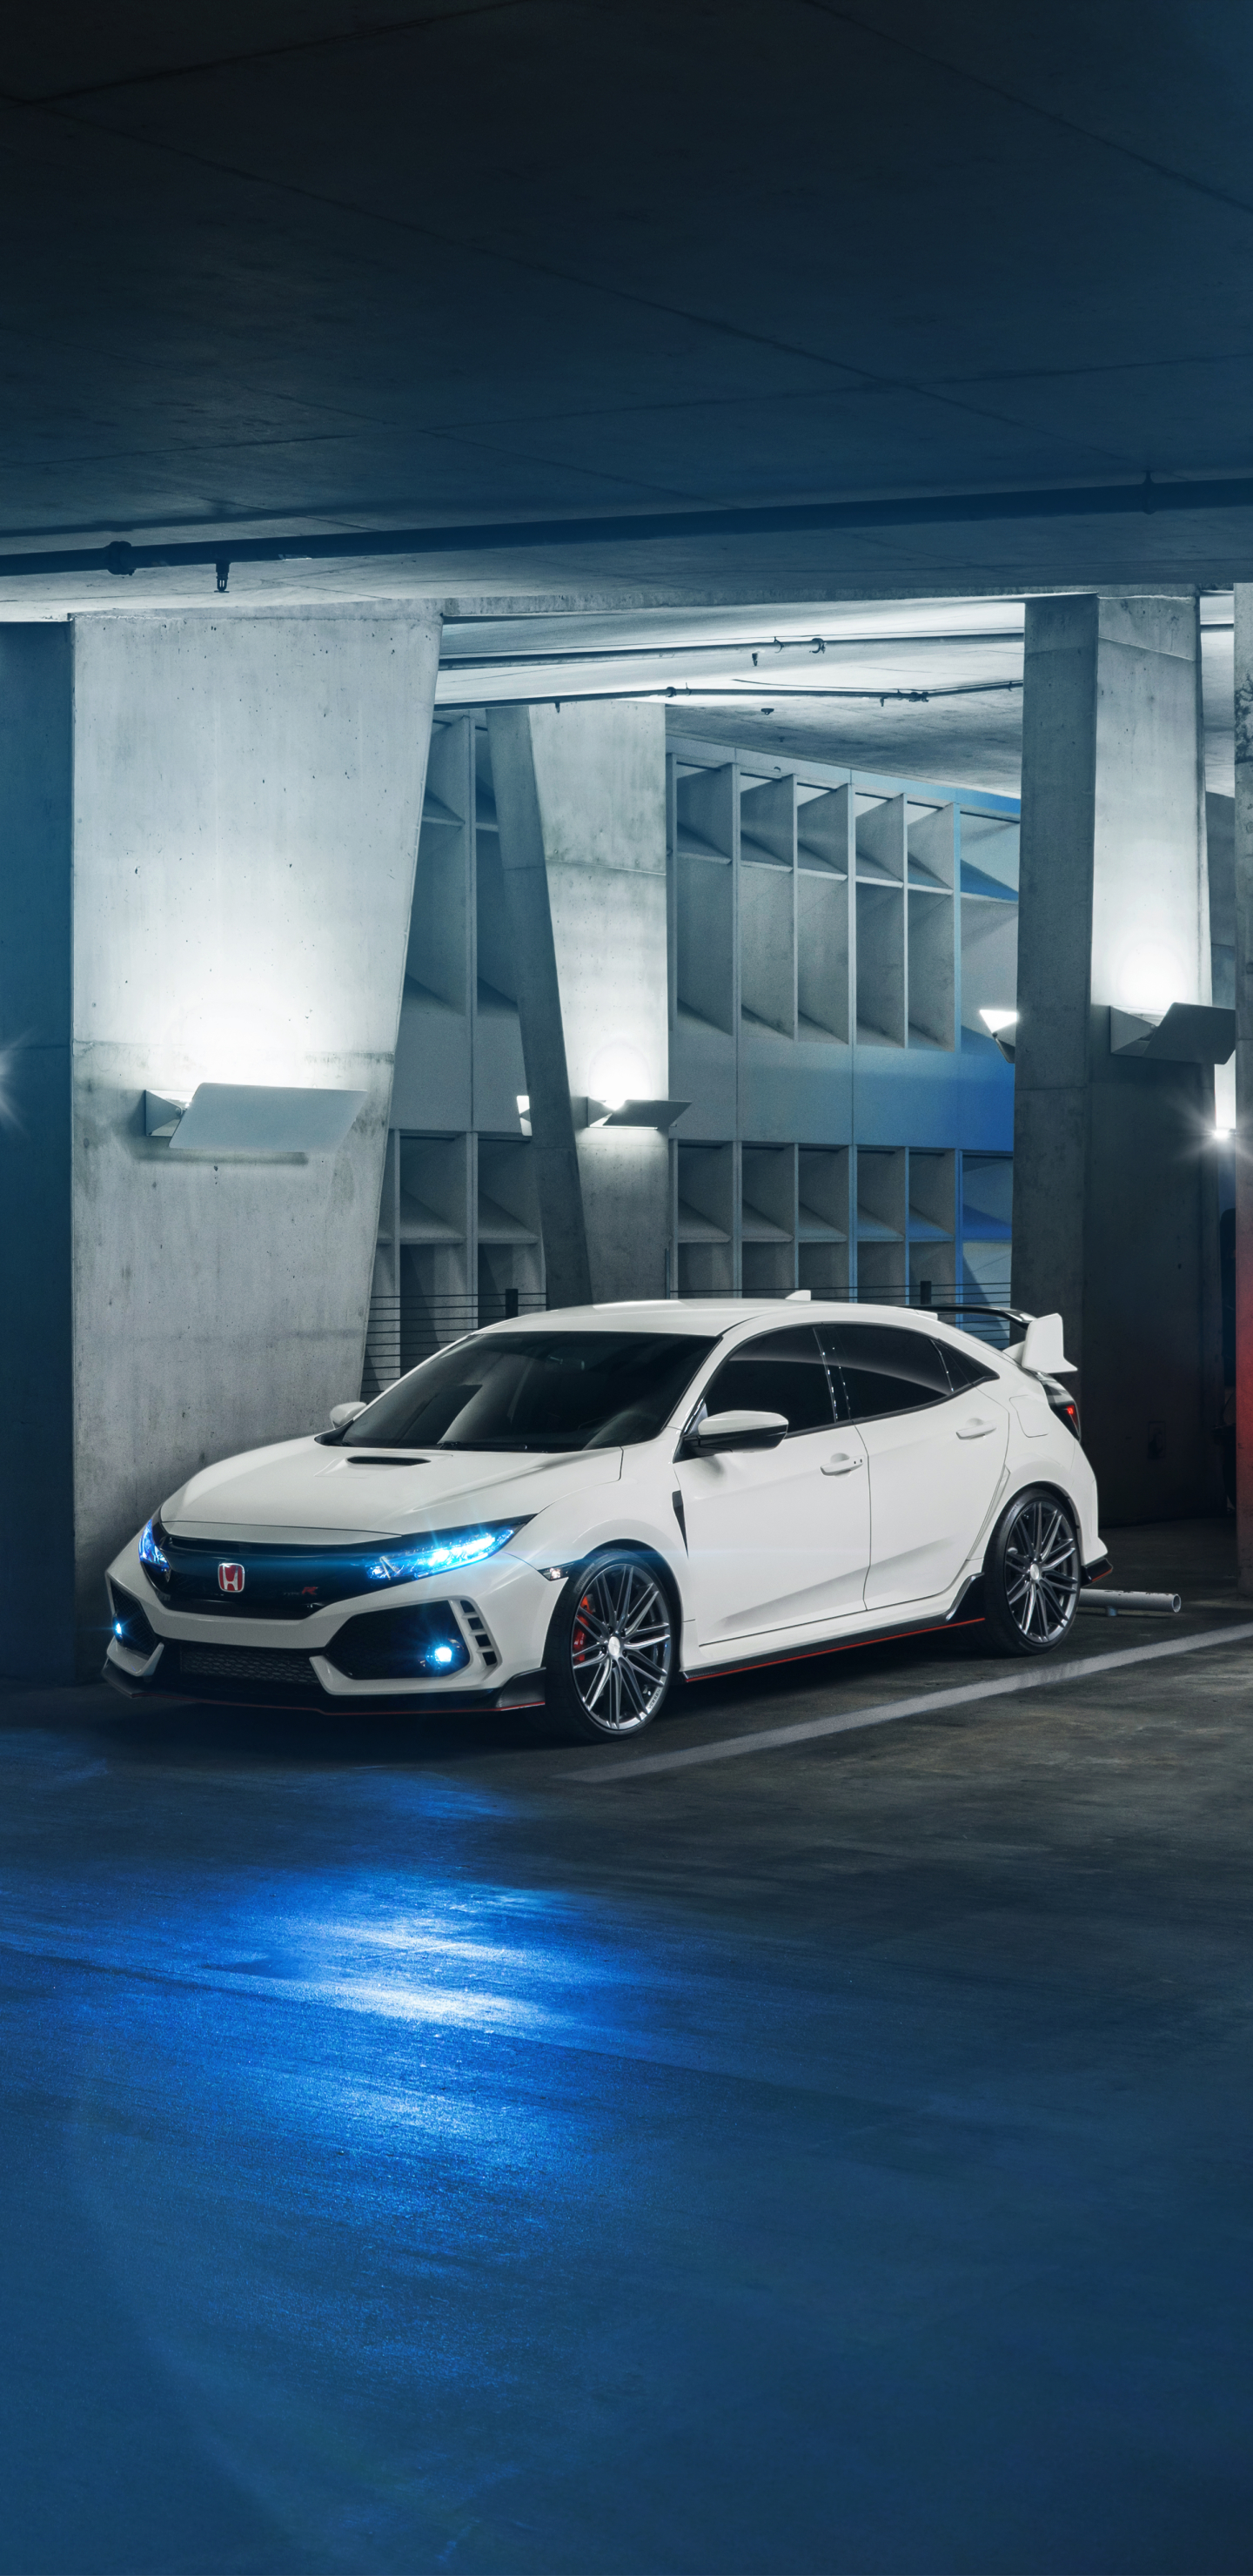 Honda Civic Wallpaper For Mobile - HD Wallpaper 